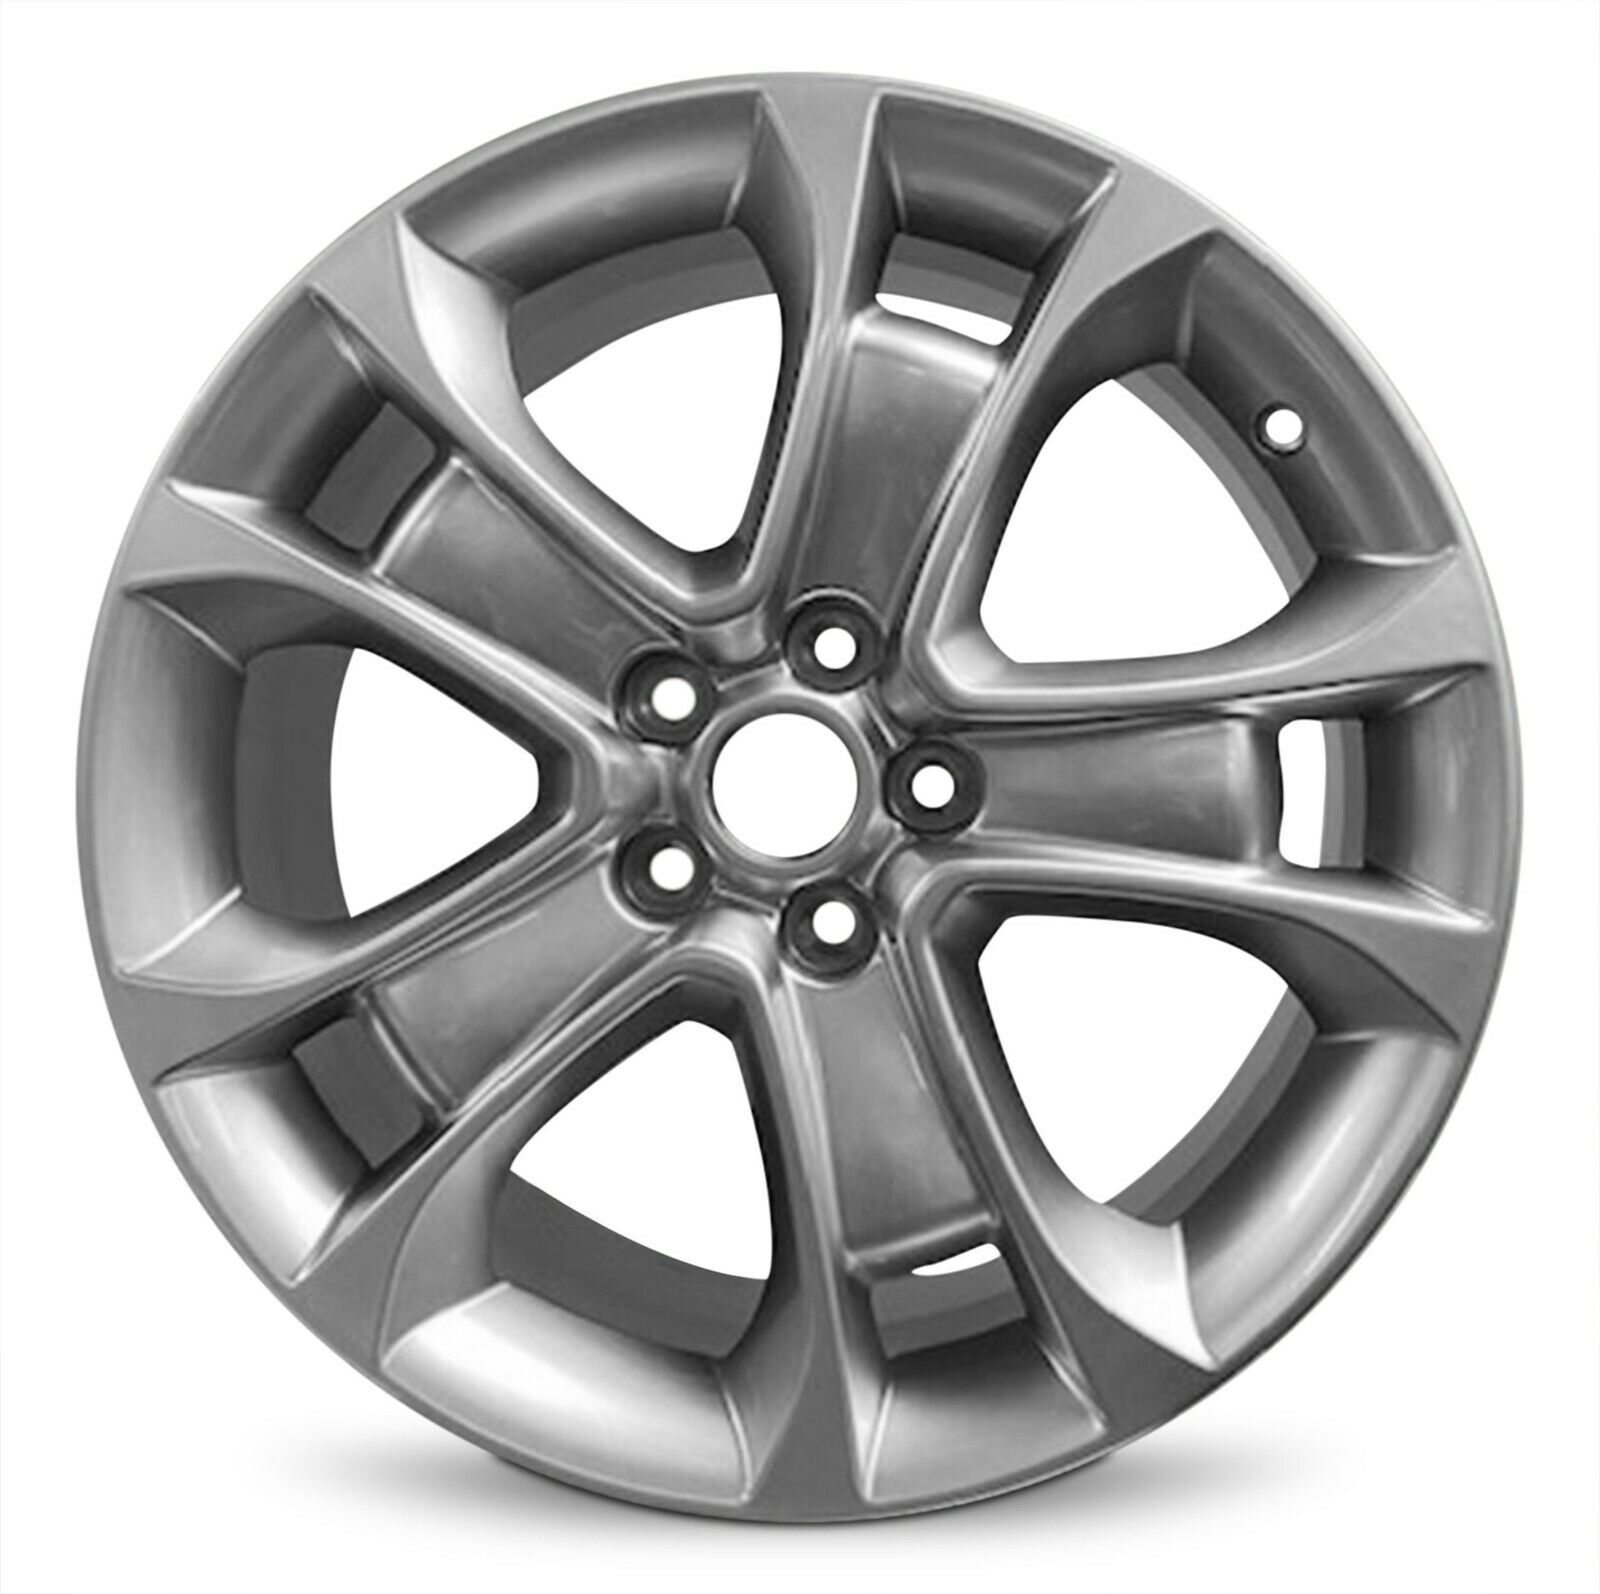 New Wheel For 2004-2012 Volvo V50 18 Inch Silver Alloy Rim